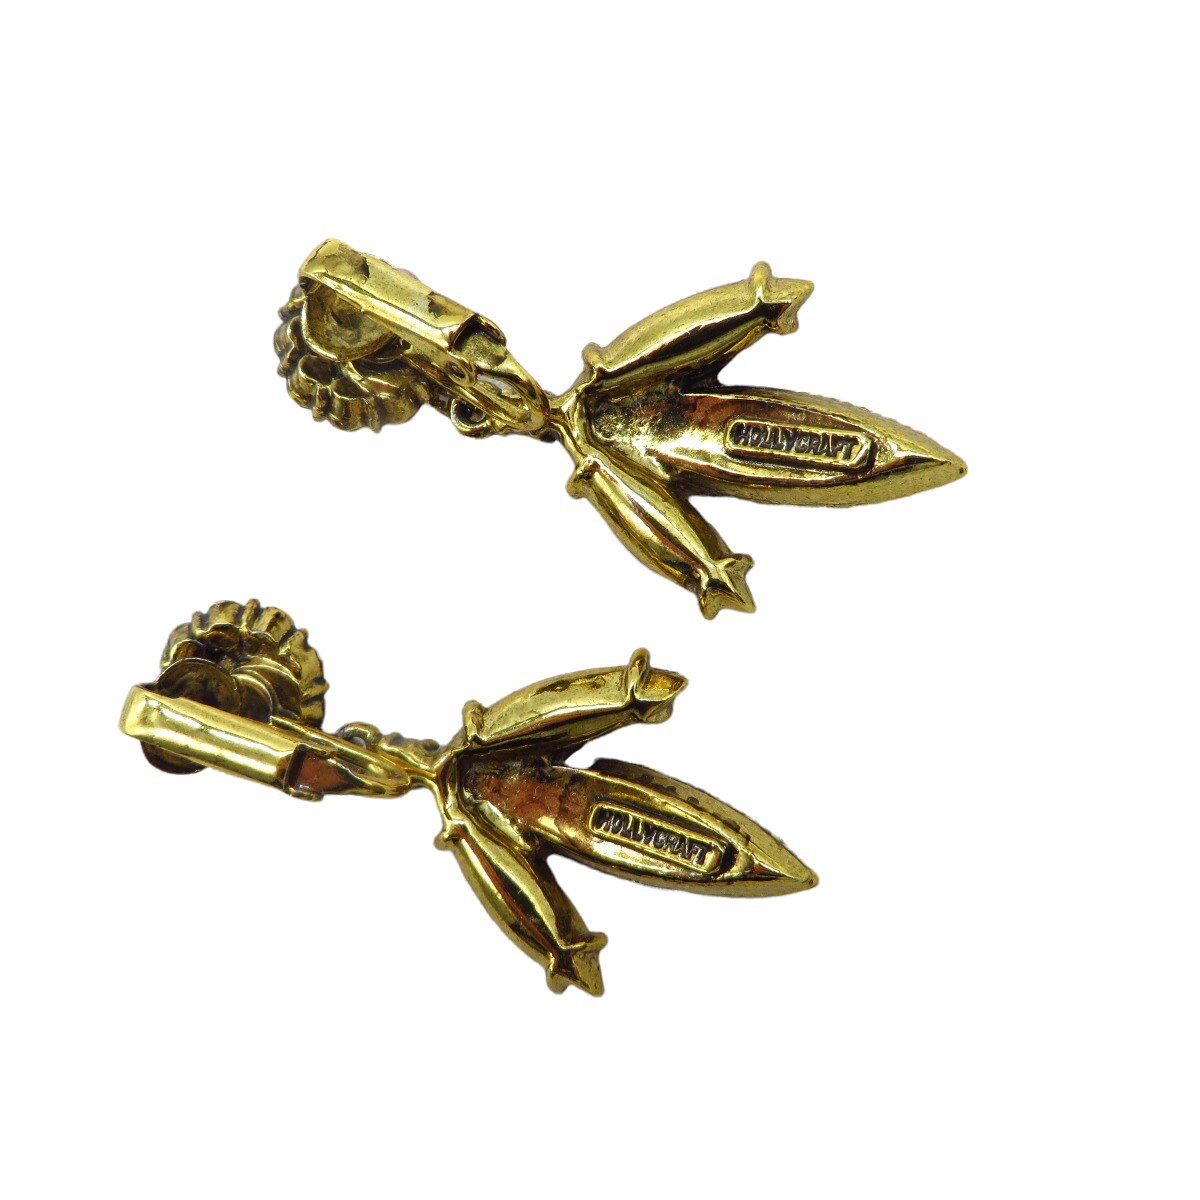 Hollycraft Golden Rhinestone Brooch and Earrings Set, Vintage Demi Parure